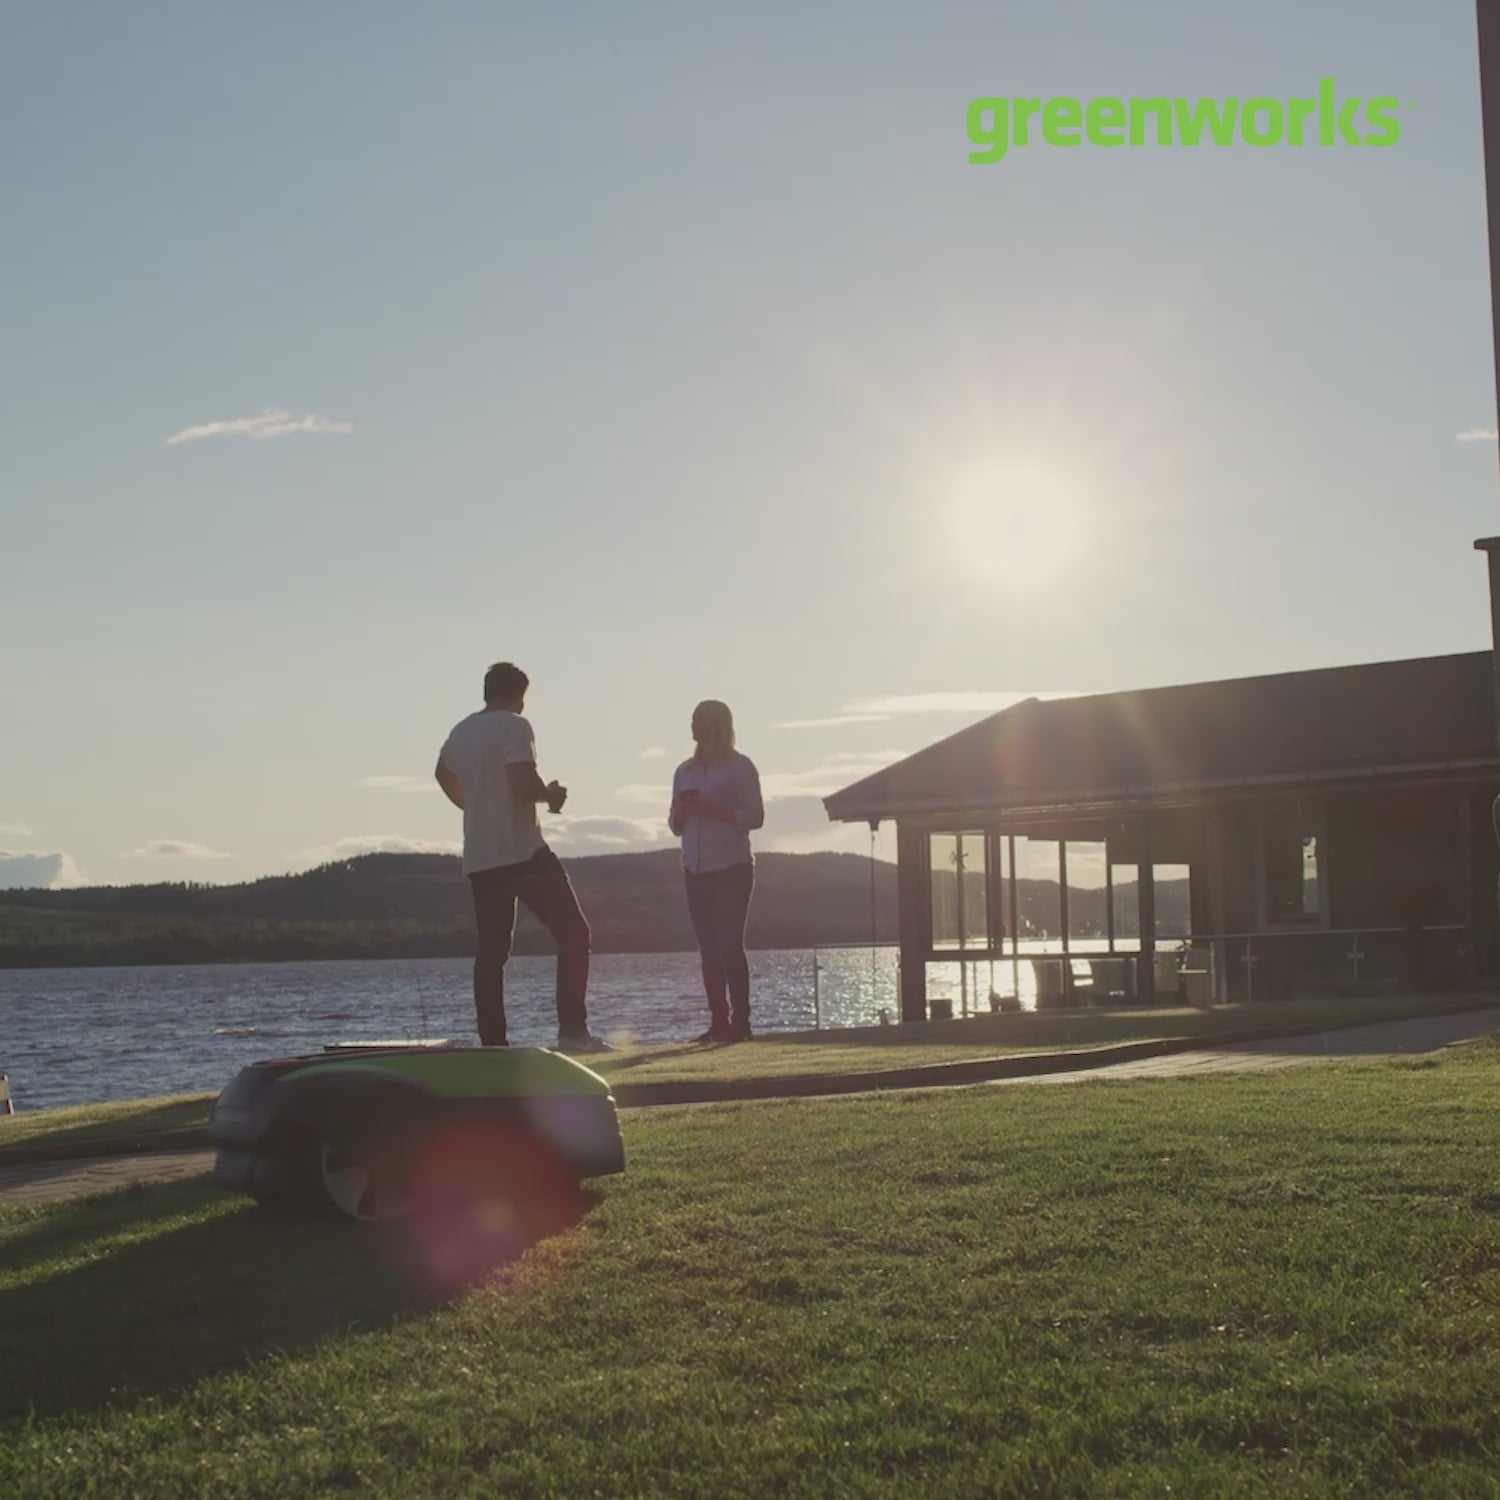 Greenworks 450m2 Robotic Auto-Lawnmower